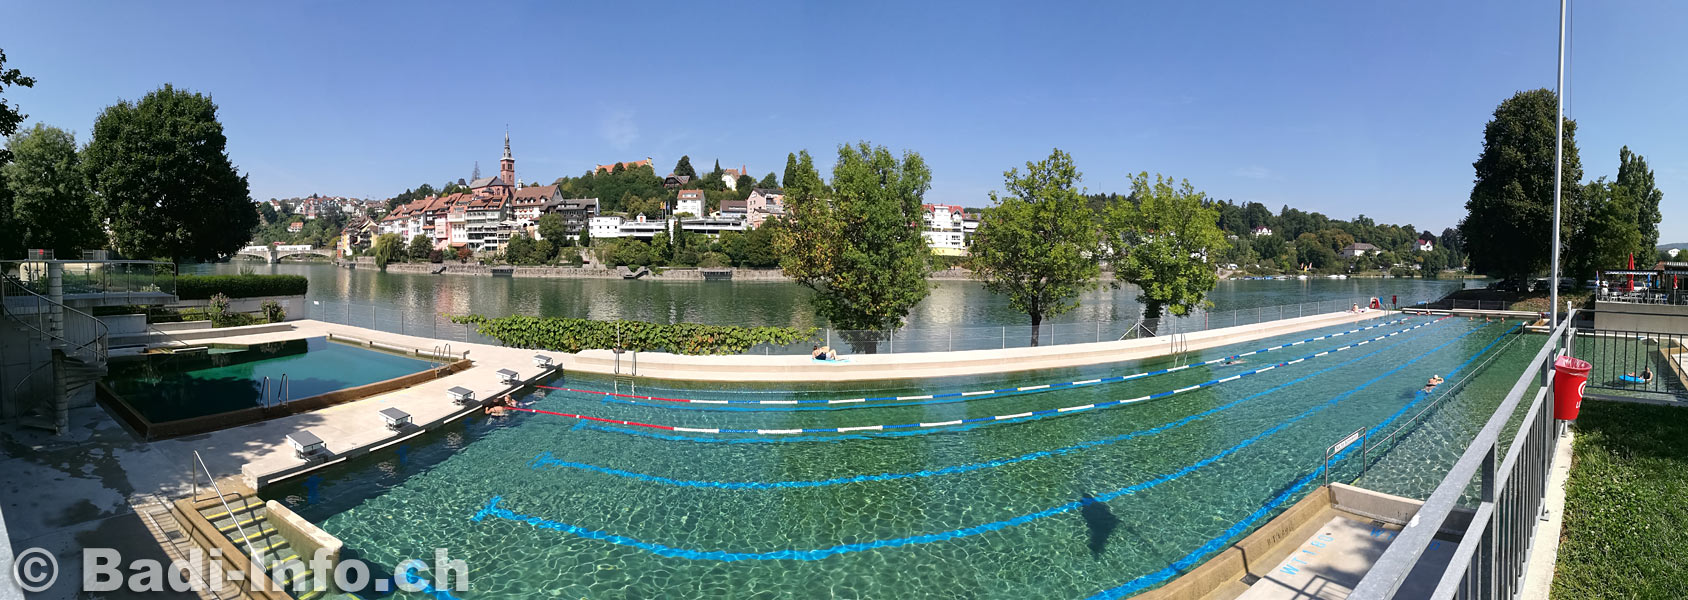 Schwimmbad Laufenburg Aargau